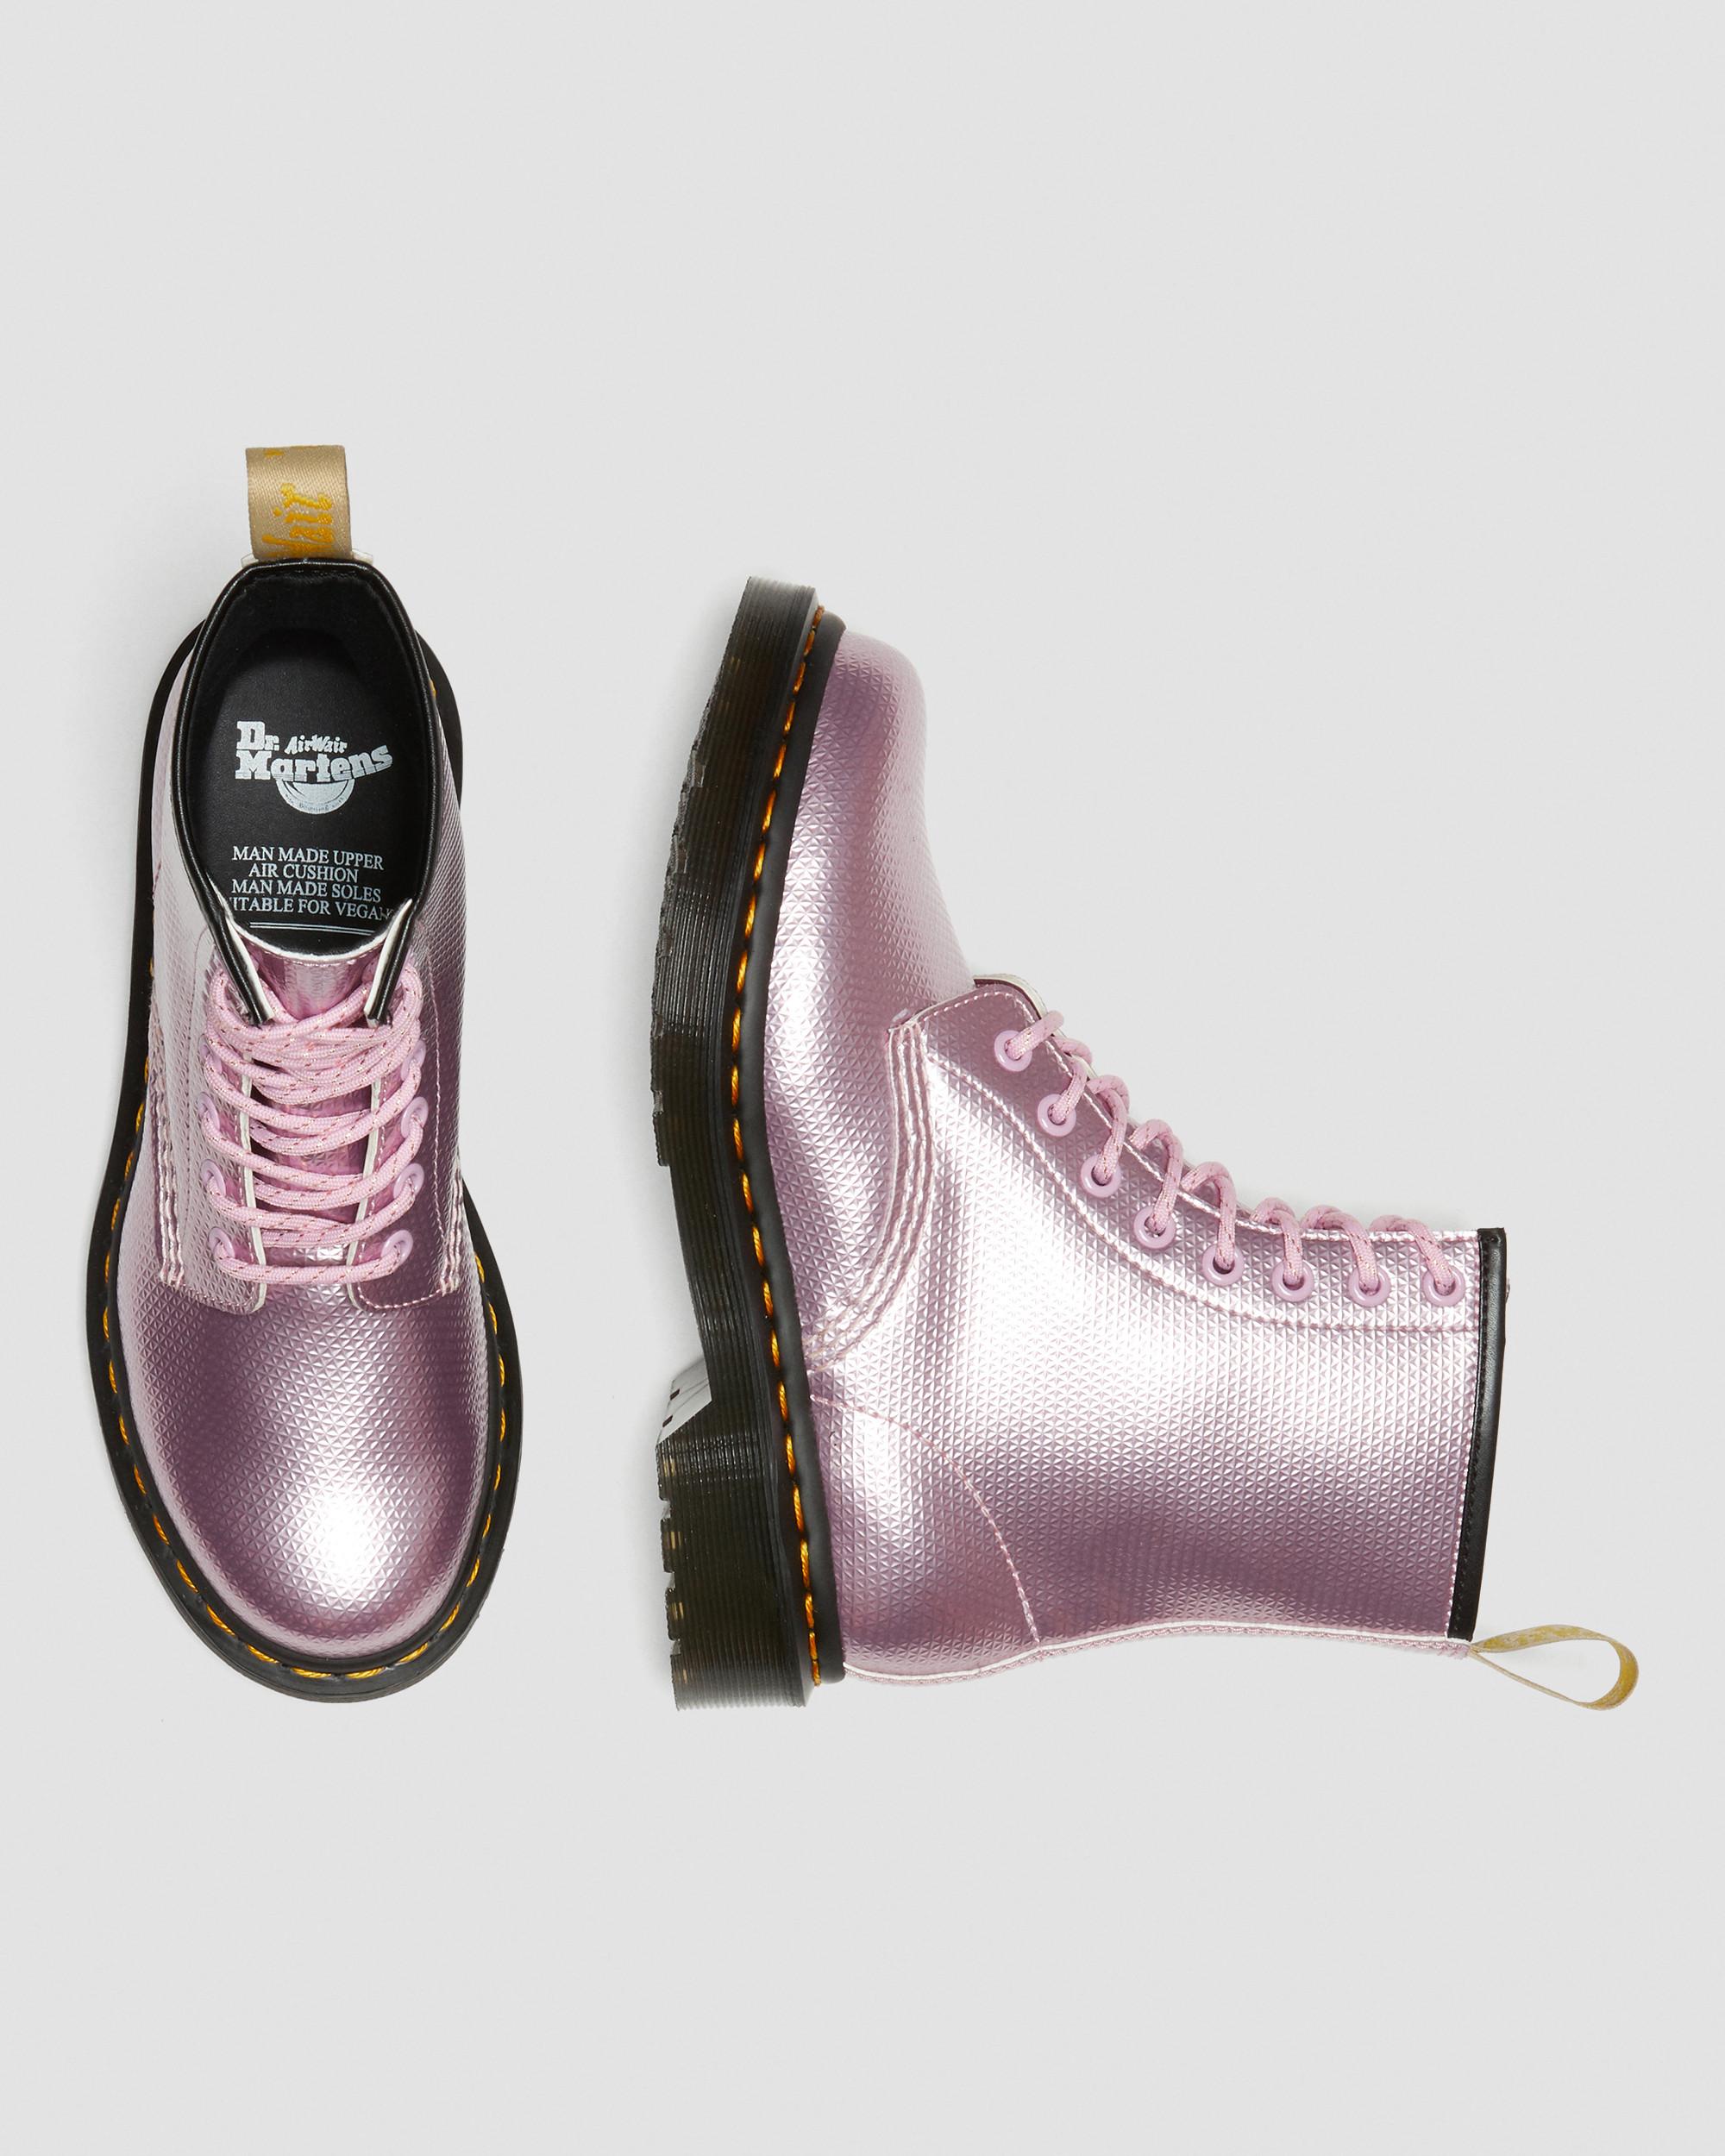 Vegan 1460 Metallic Emboss Lace Up Boots in Pink